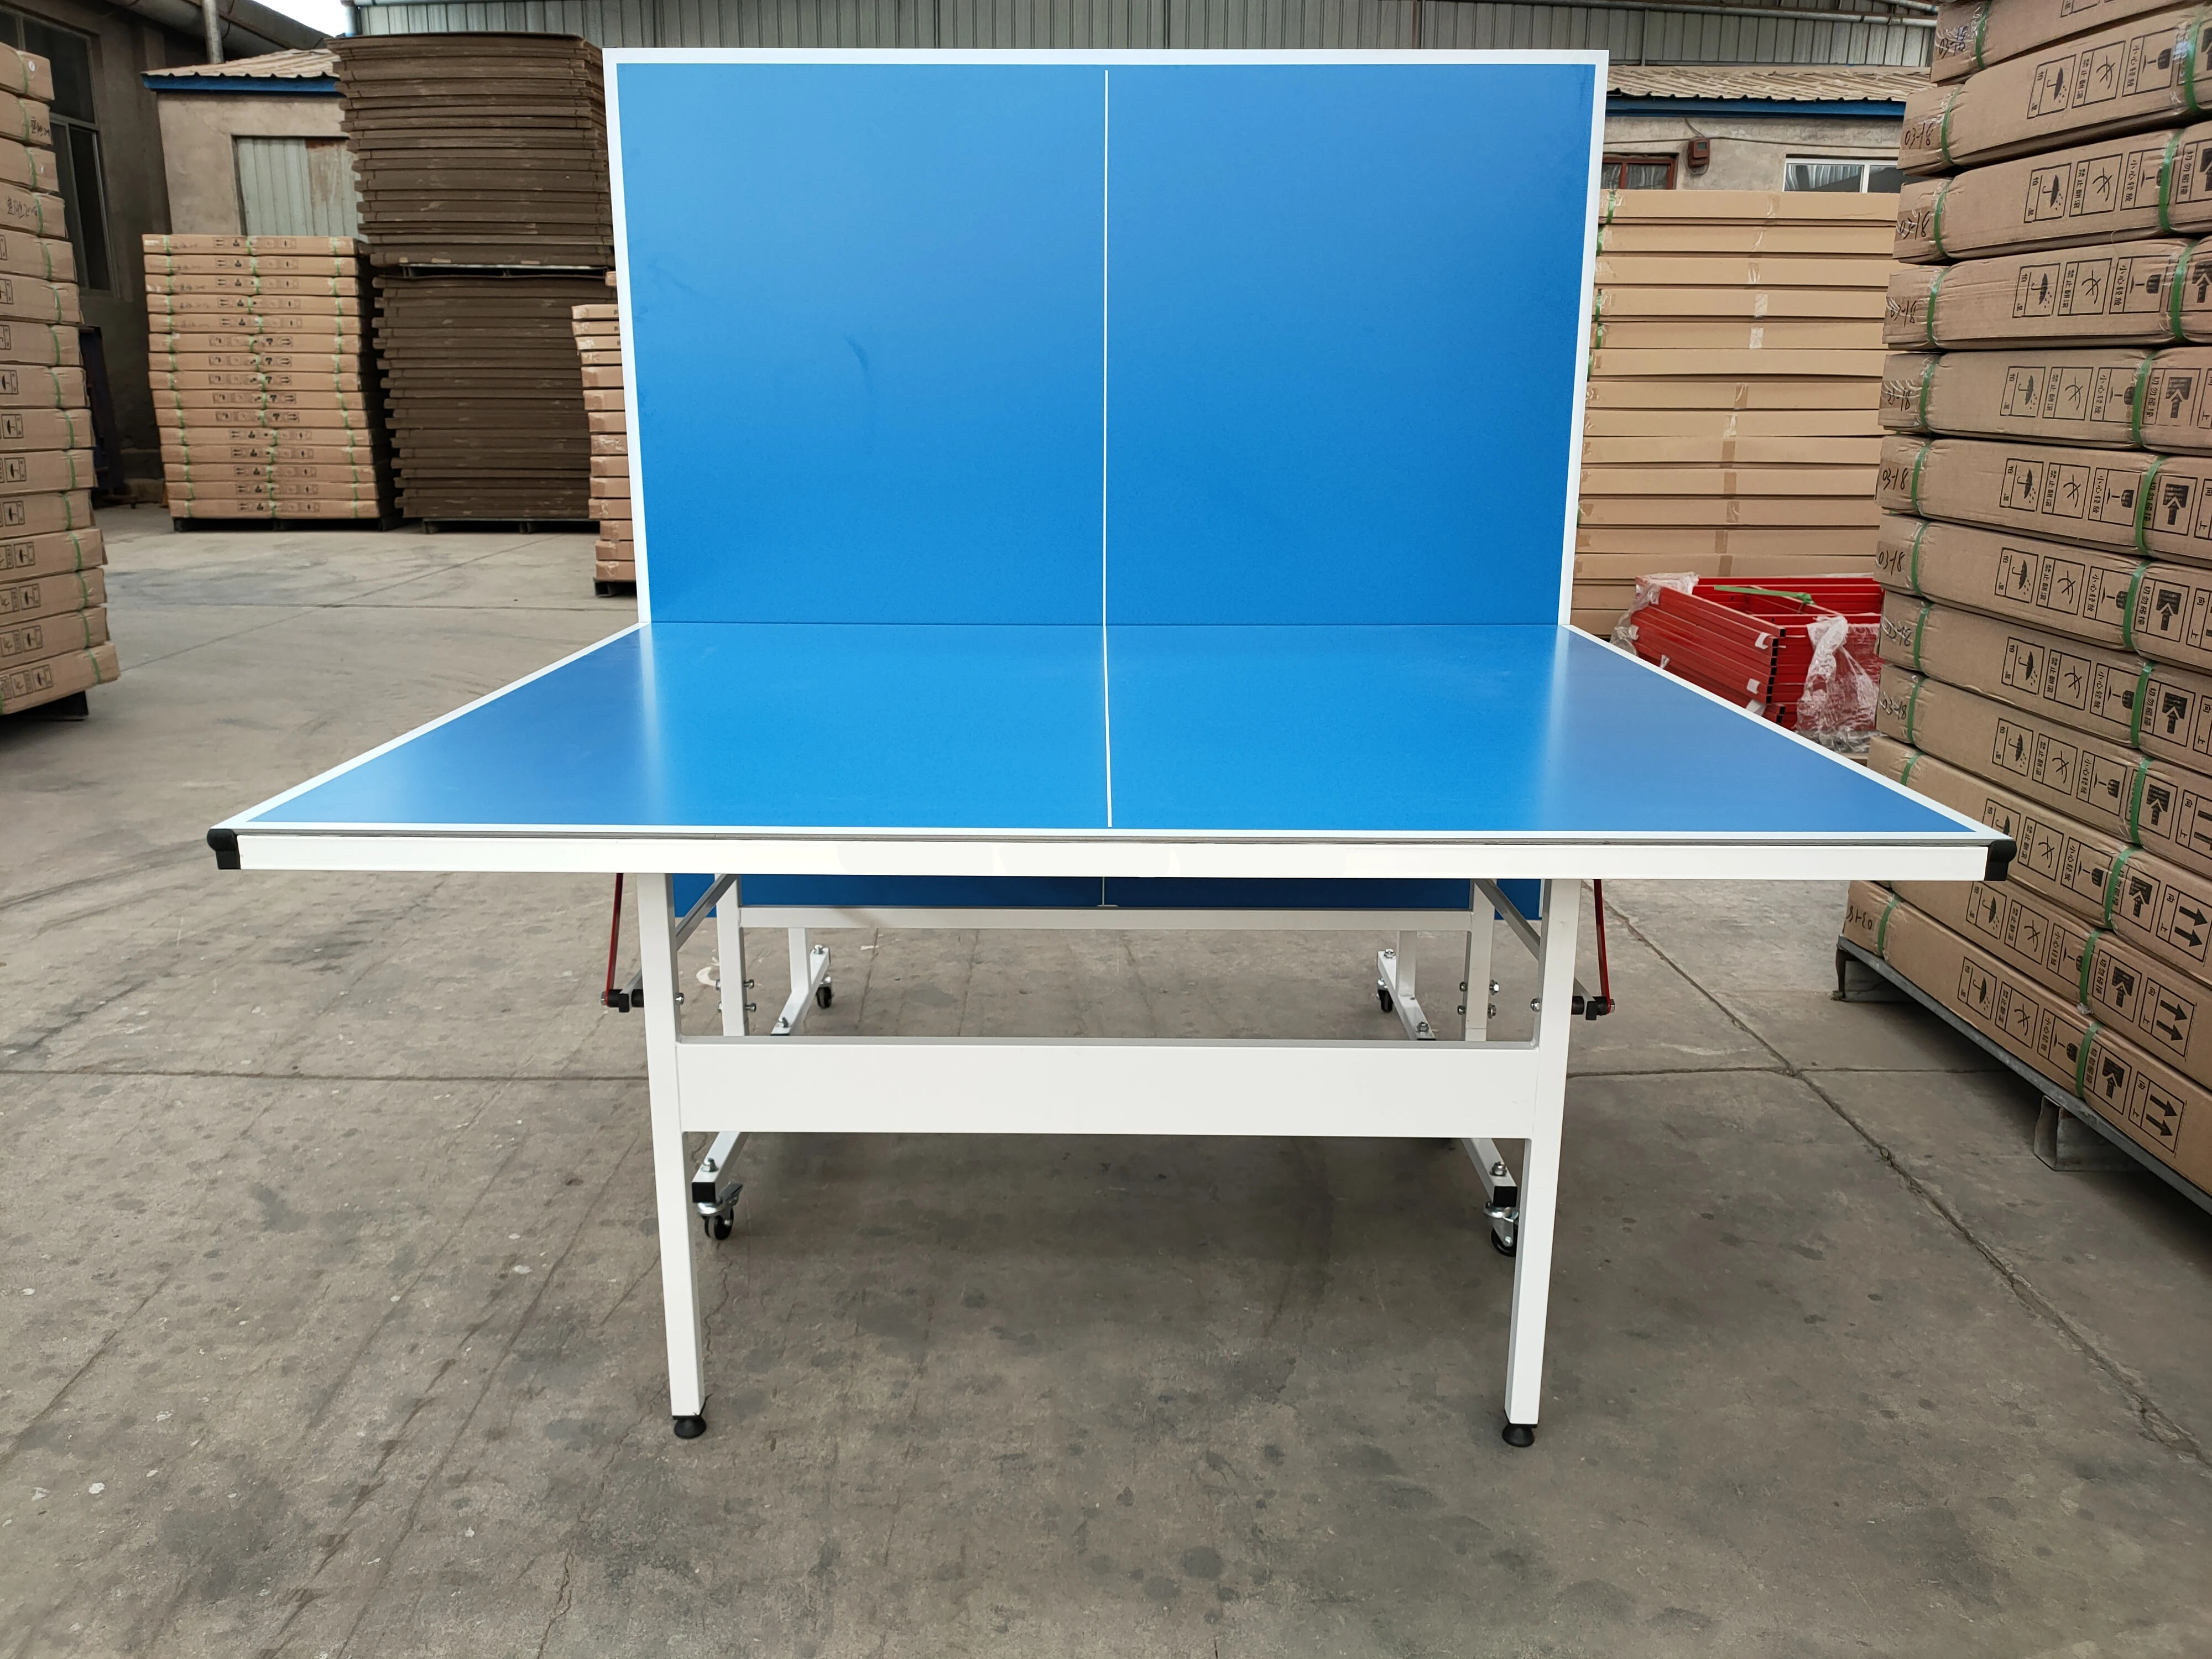 Aluminium Outdoor movable foldable table tennis table